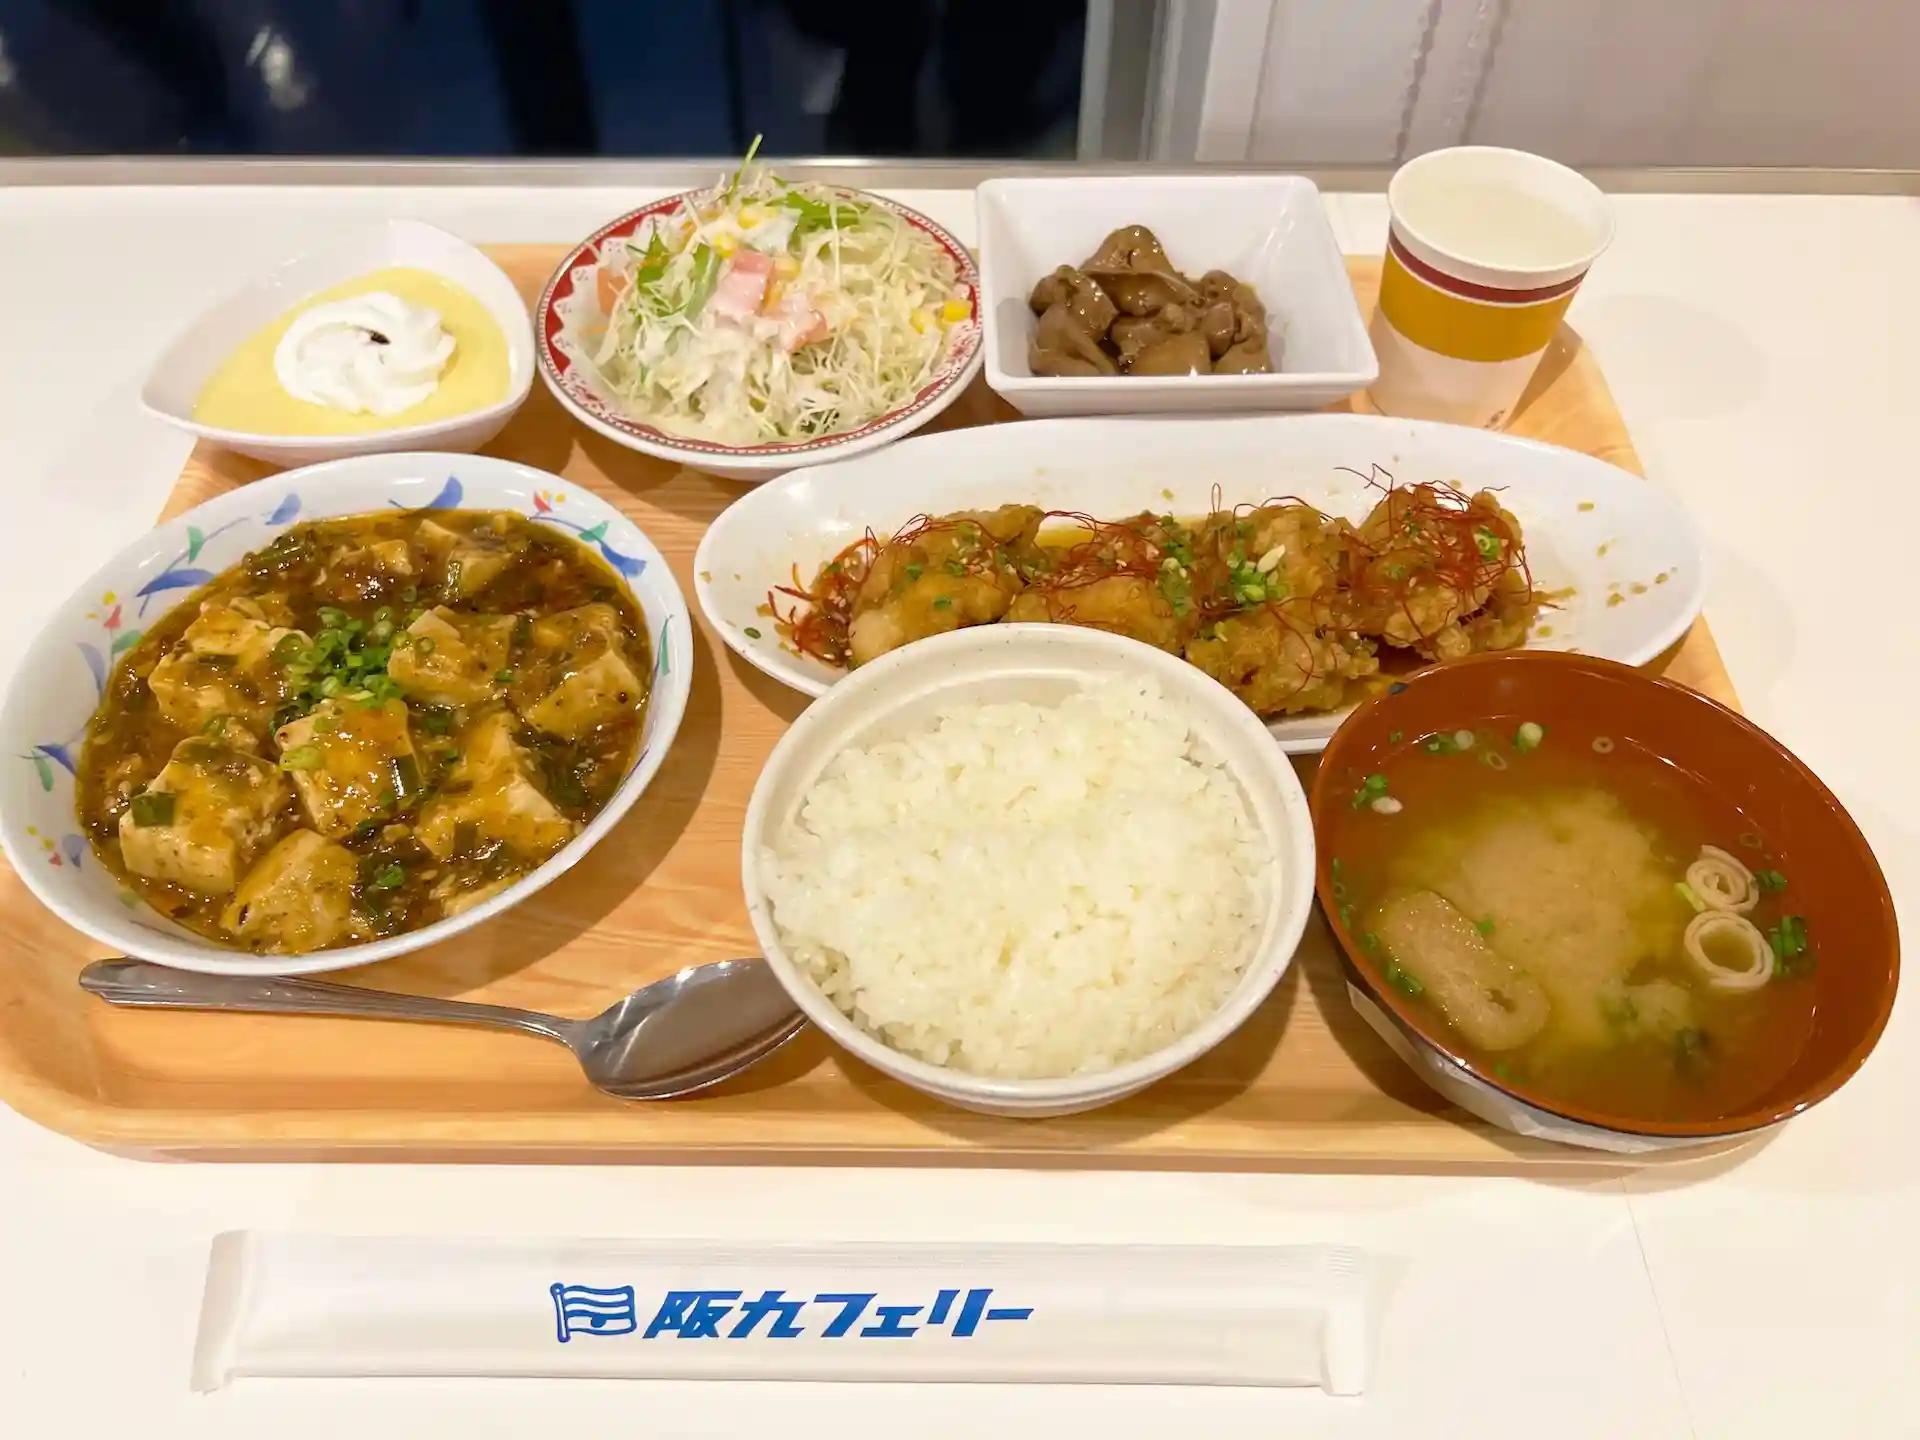 Dinner food at Hankyu Ferry Settsu onboard restaurant